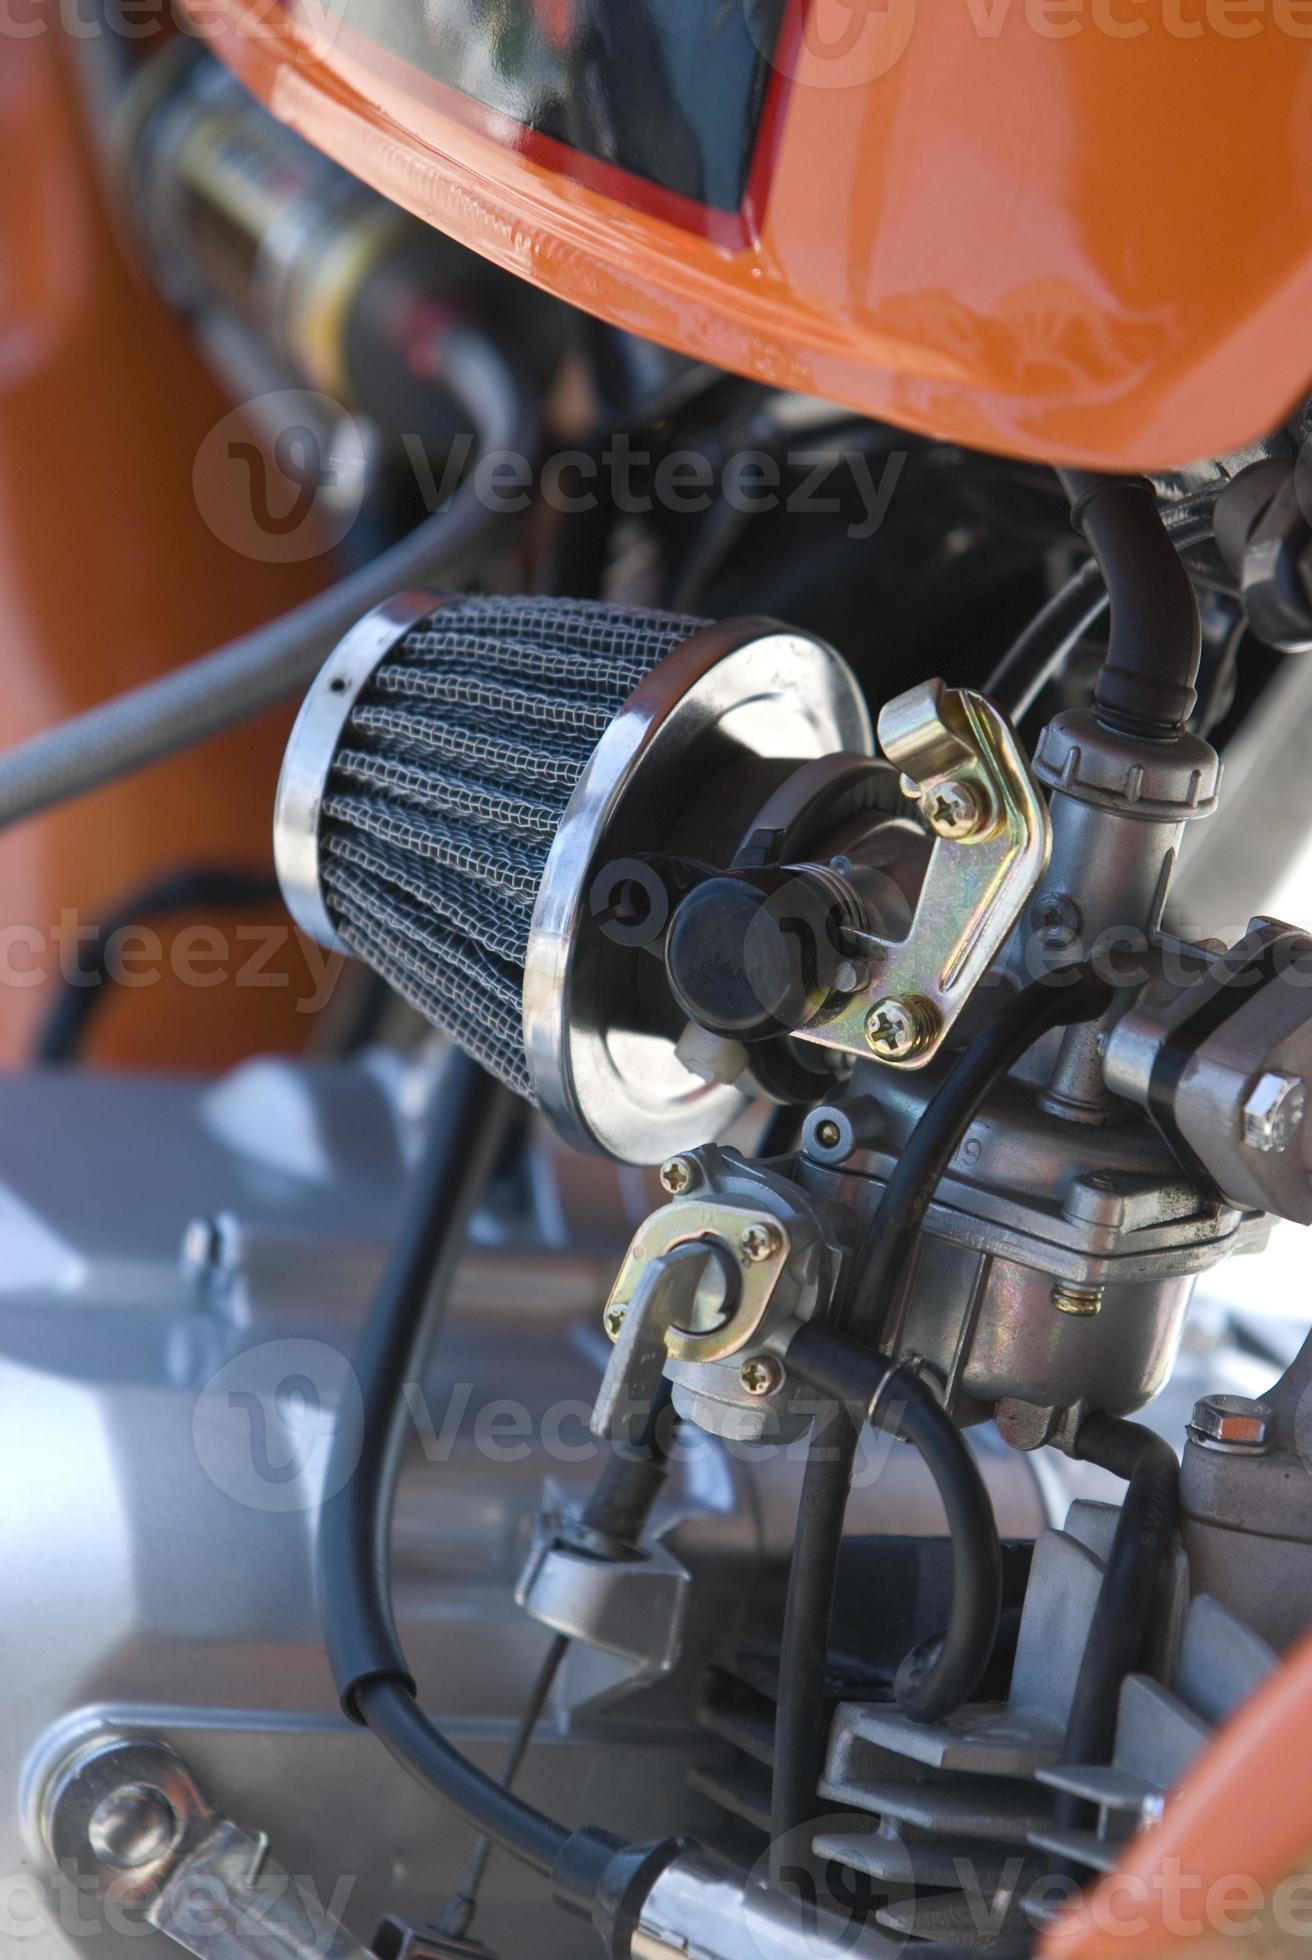 carburador de moto pequena de corrida 771626 Foto de stock no Vecteezy